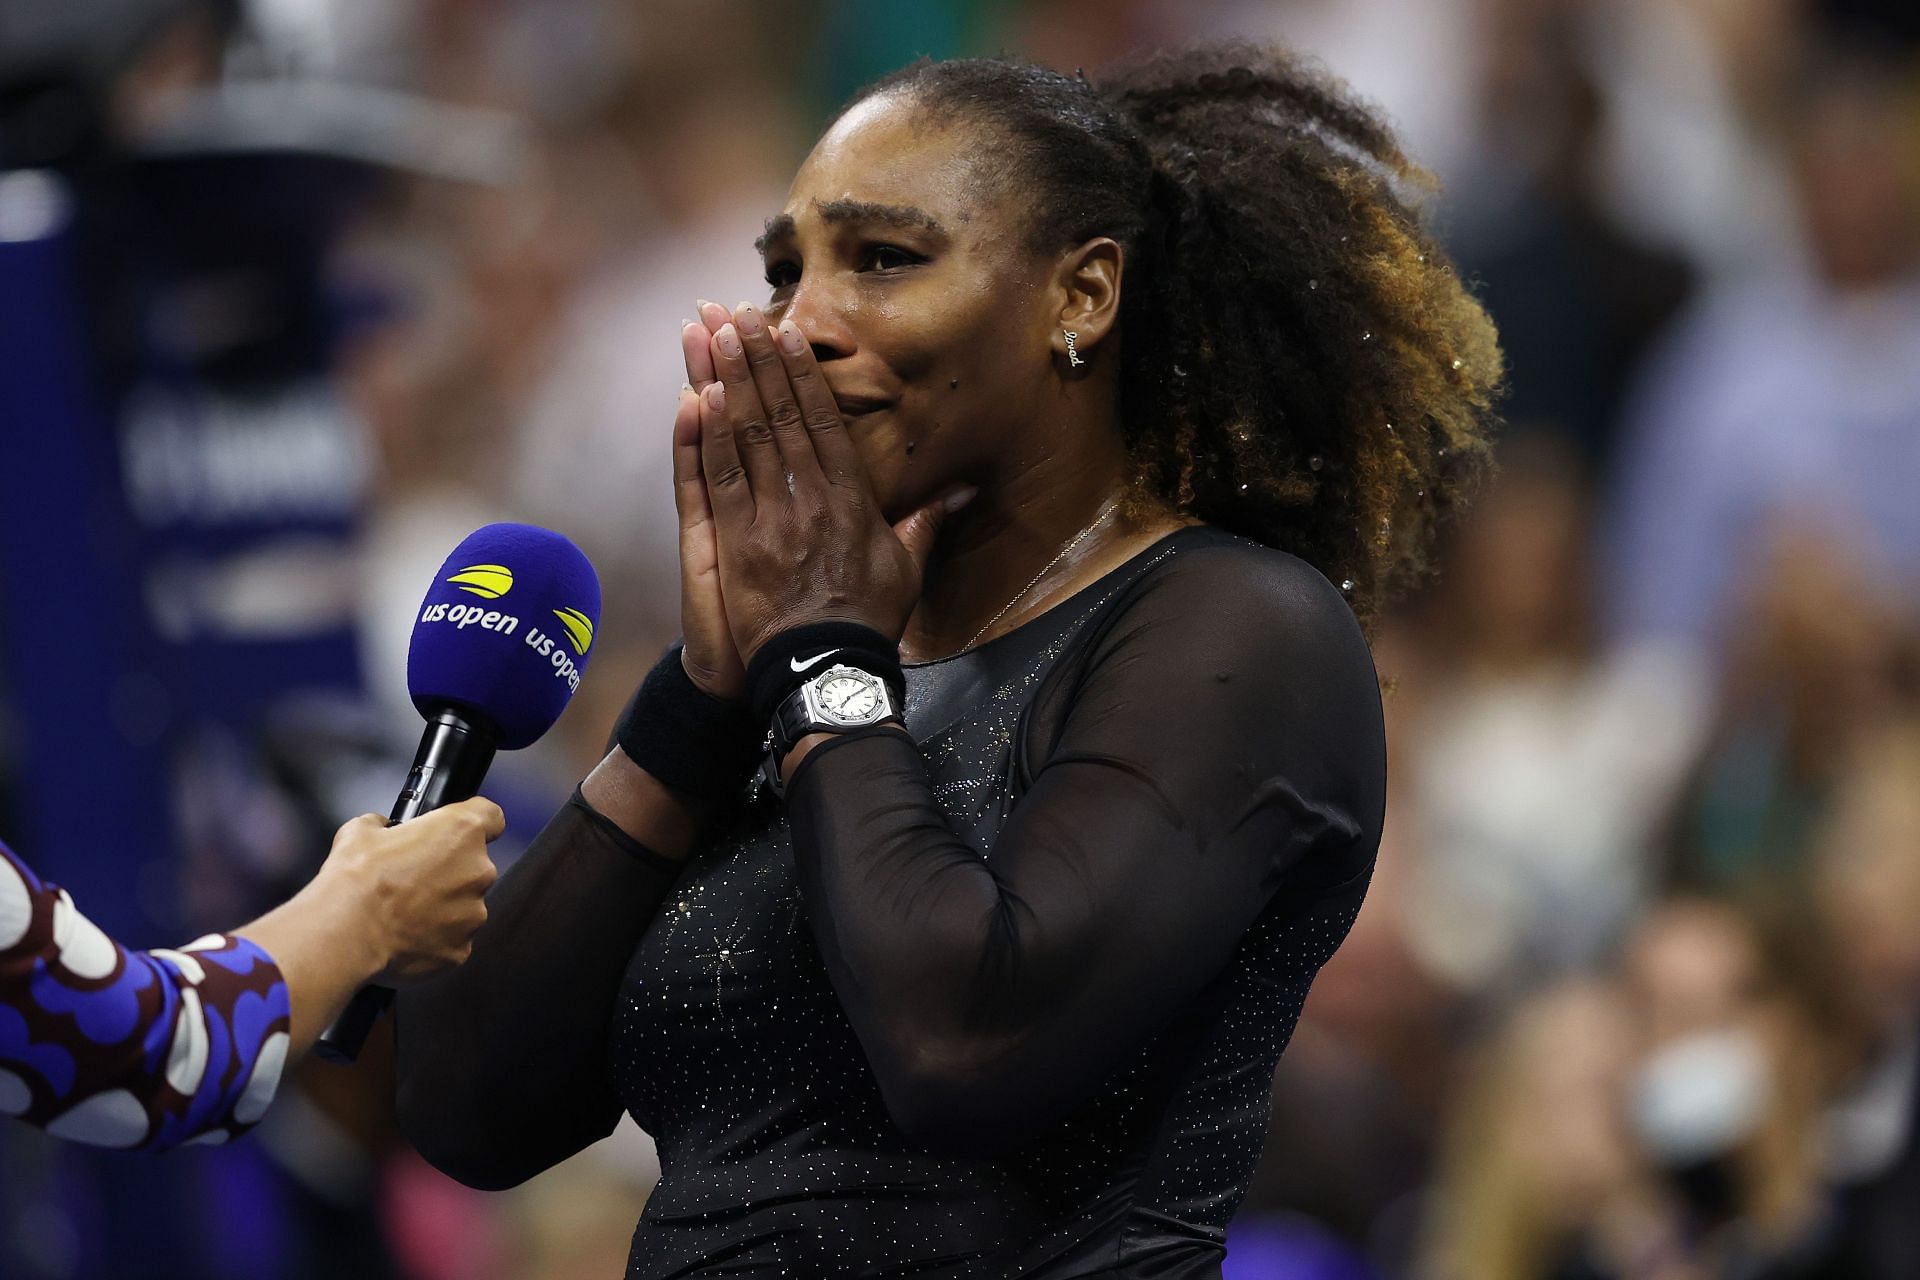 Serena Williams won 23 Major titles, three more than Roger Federer.